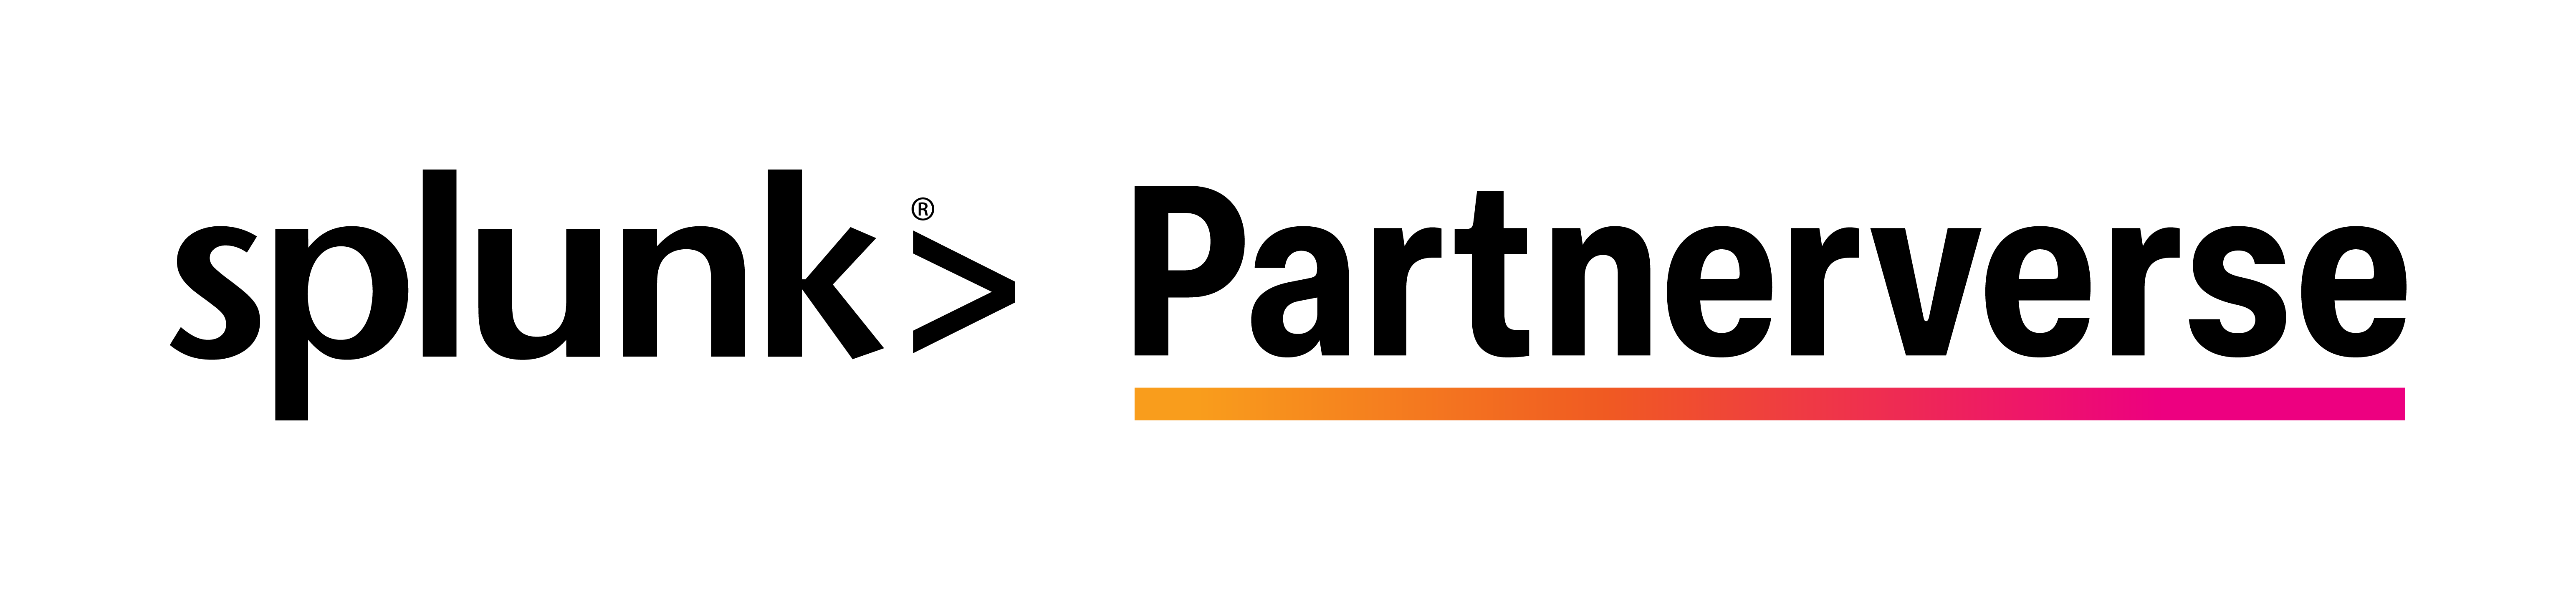 splunk partnerverse logo